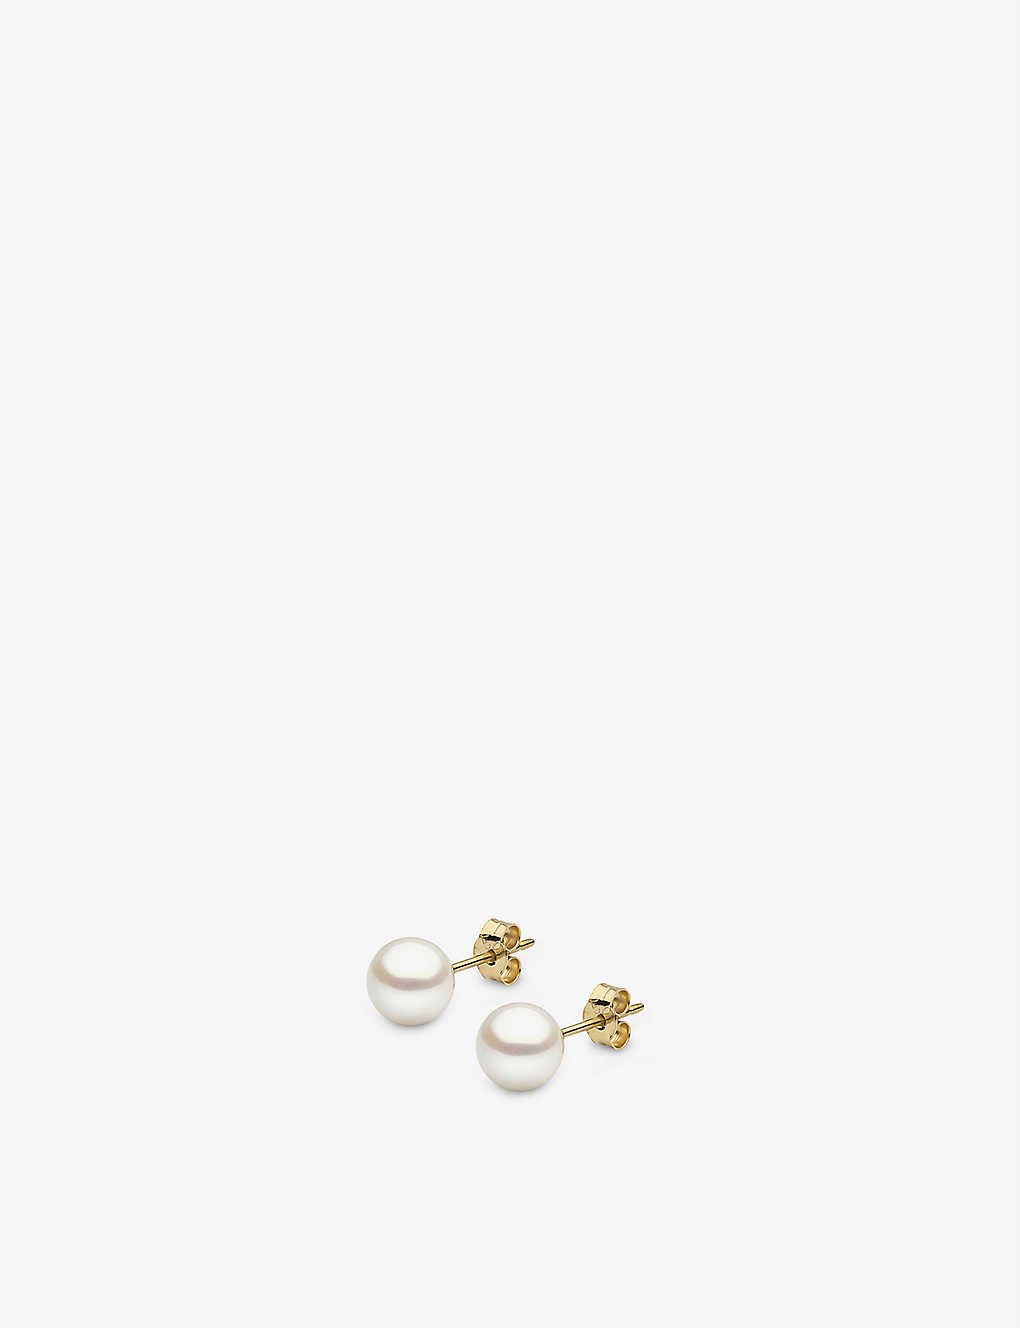 Yoko London 18ct Yellow Gold And Akoya Pearl Stud Earrings